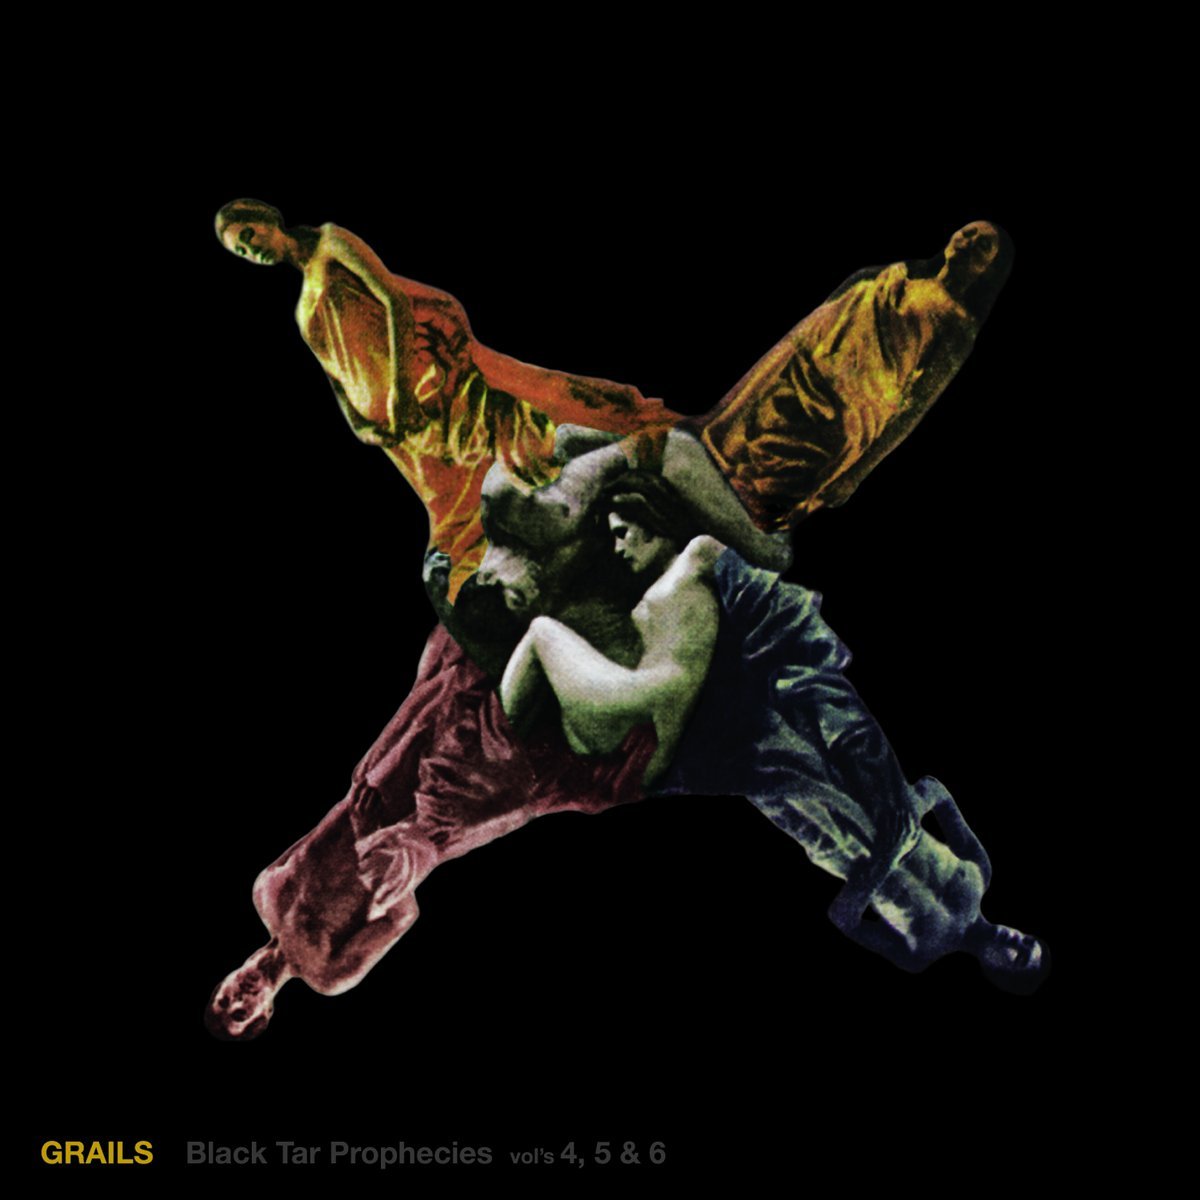 Grails - 'Black Tar Prophecies 4, 5 & 6' album cover